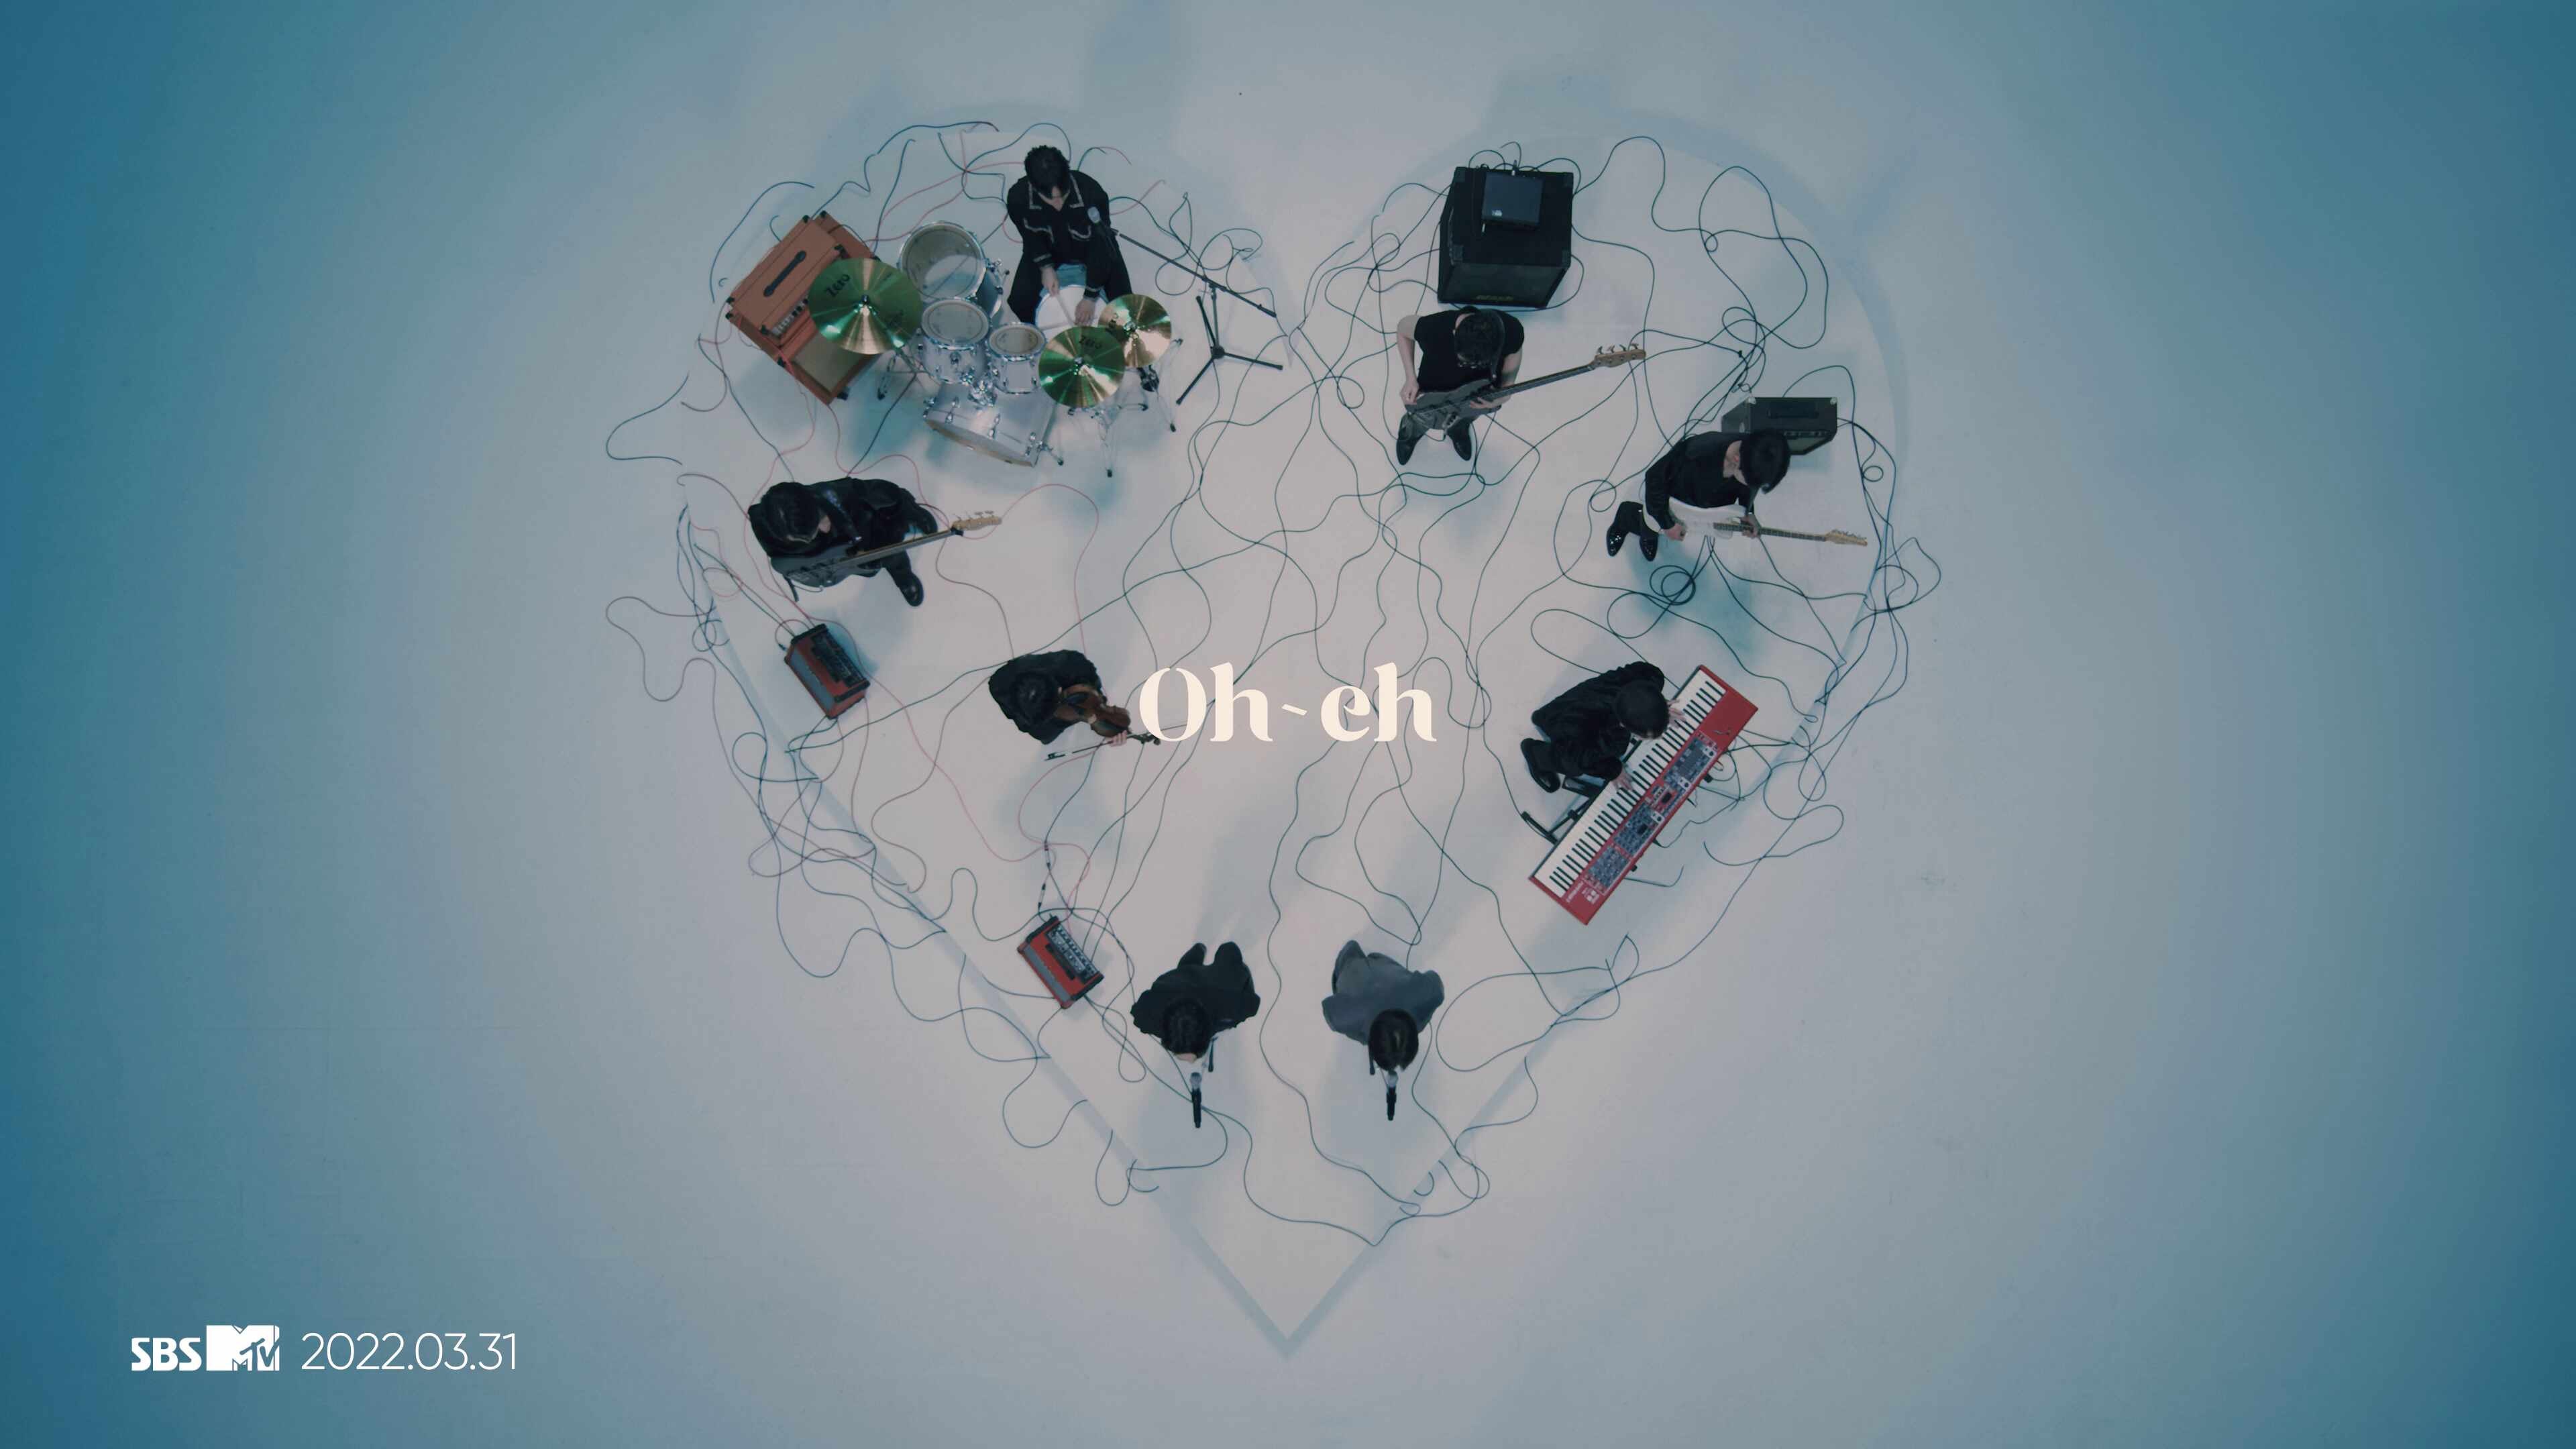 [MV] 데이브레이크 X LUCY - 'Oh-eh' / ENG sub